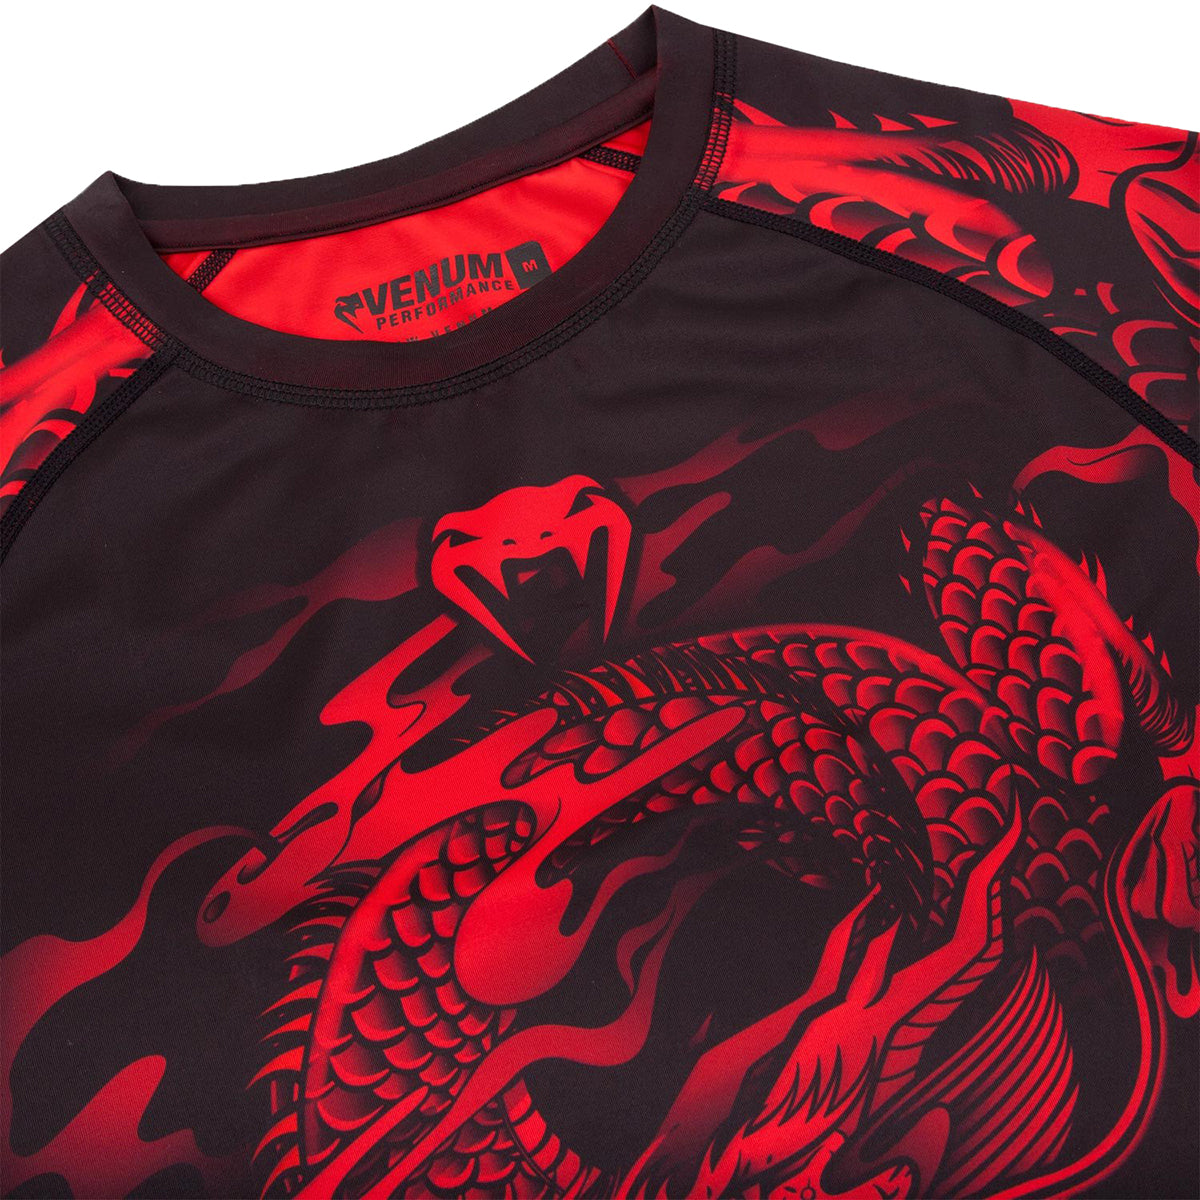 Venum Dragon's Flight Dry Tech Short Sleeve MMA Rashguard - Black/Red Venum